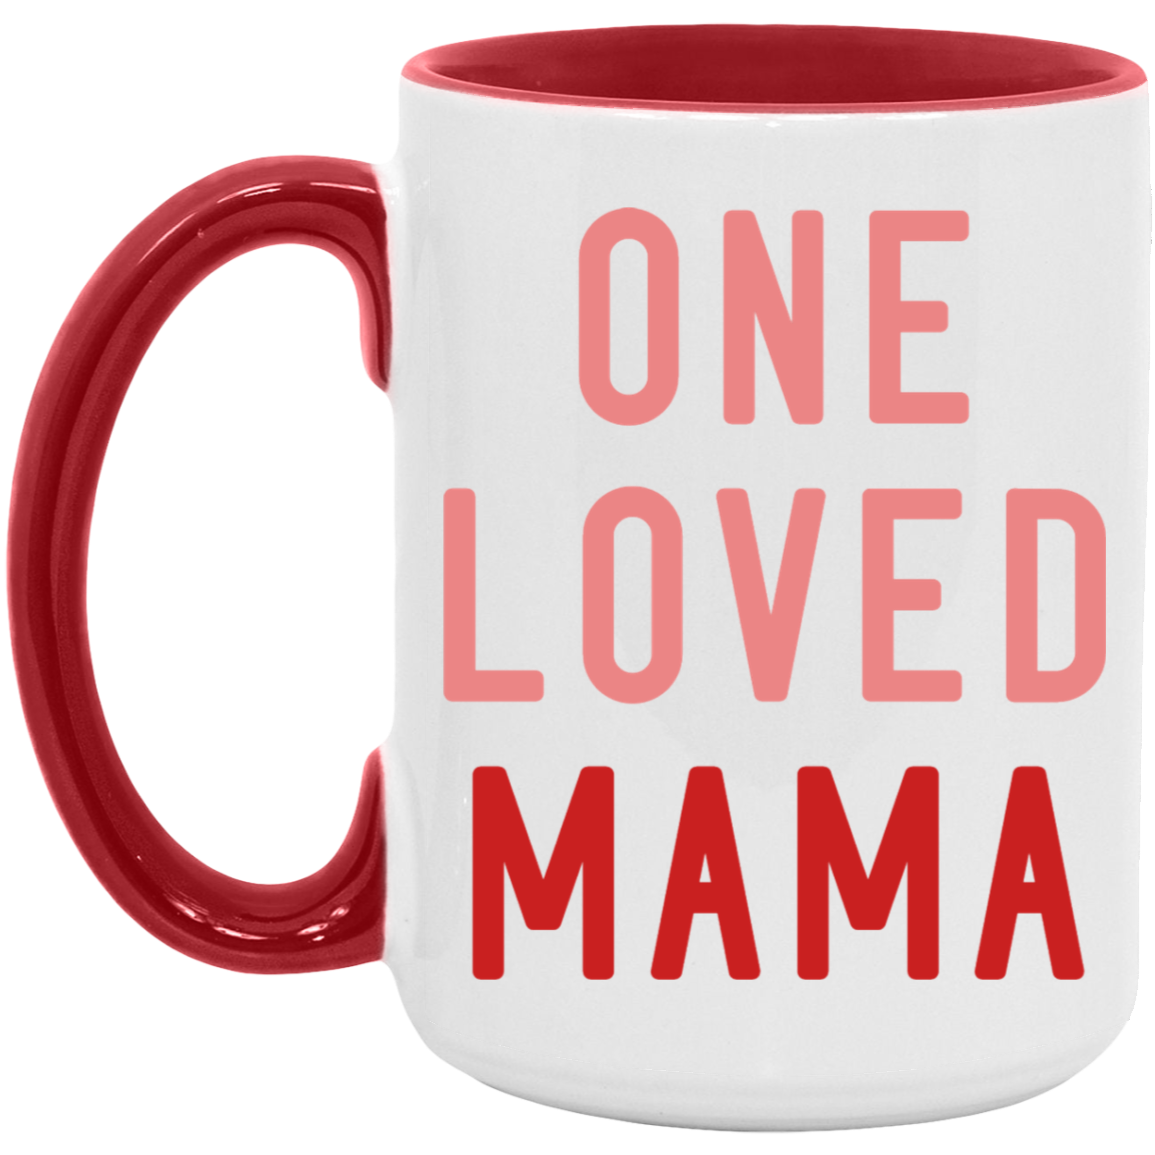 One Loved Mama Mug